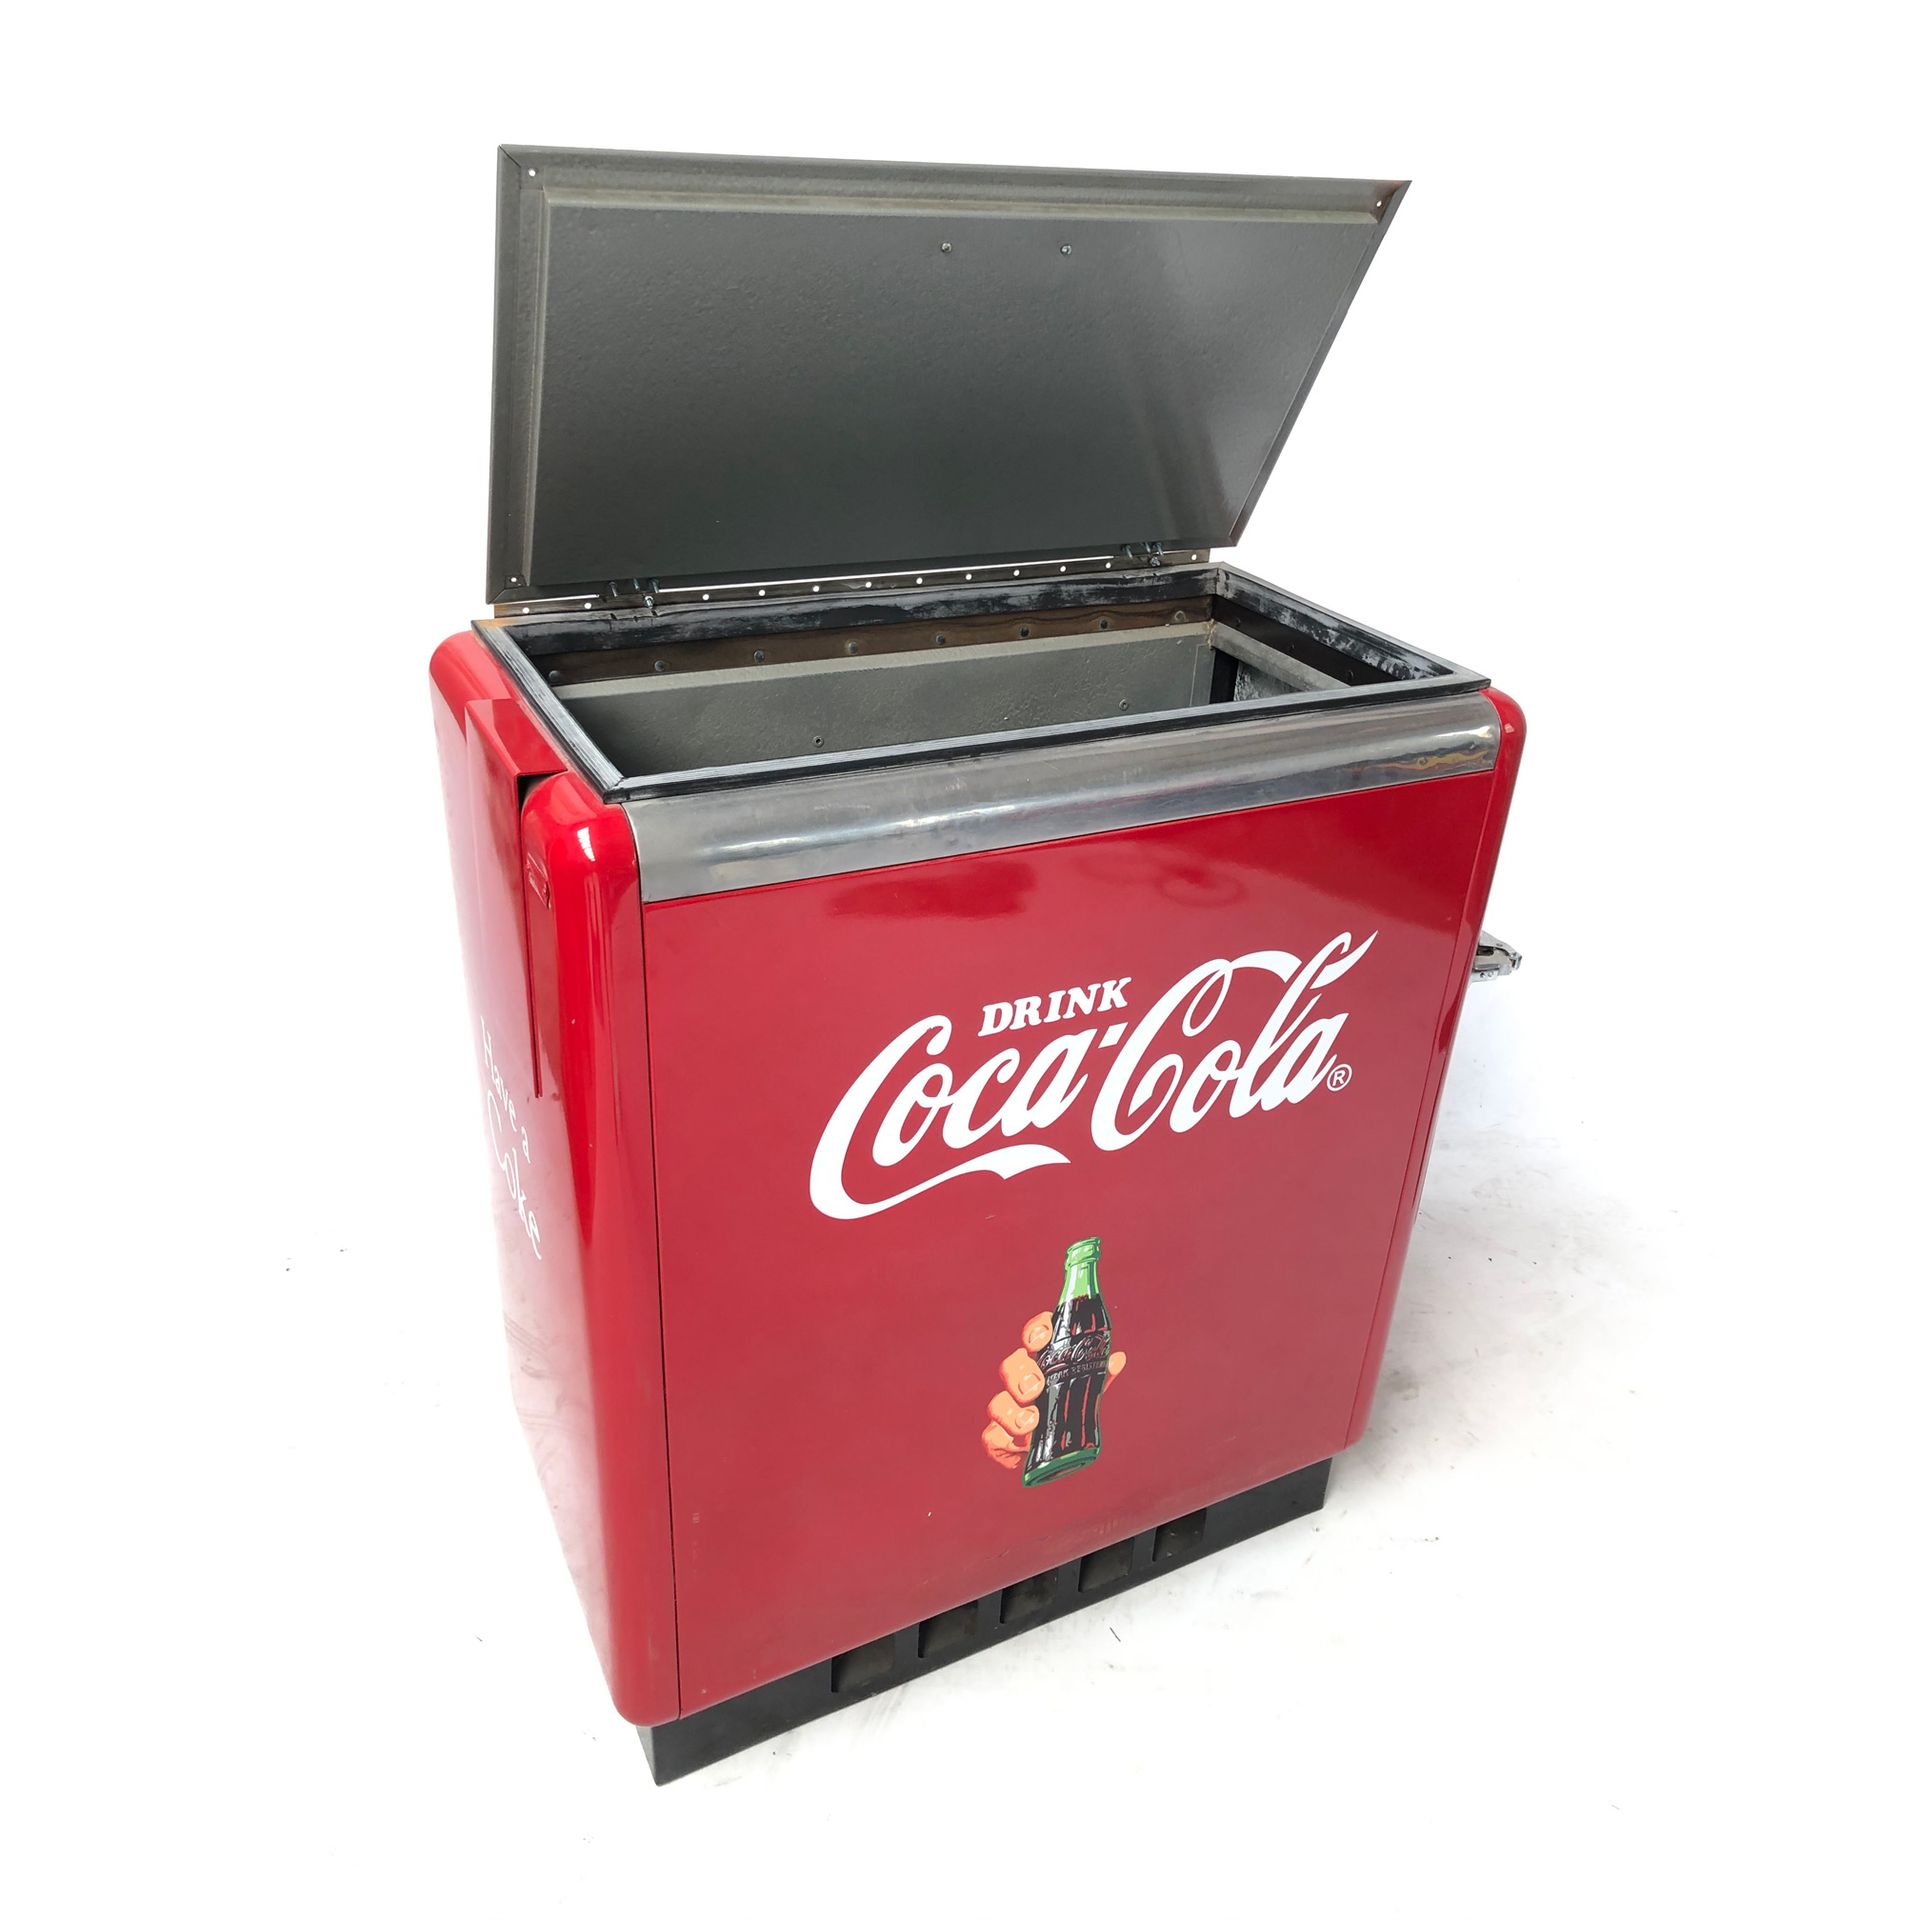 Original Coca-Cola Cooler with Top and Side Access Très belle glacière Coca-Cola&hellip;